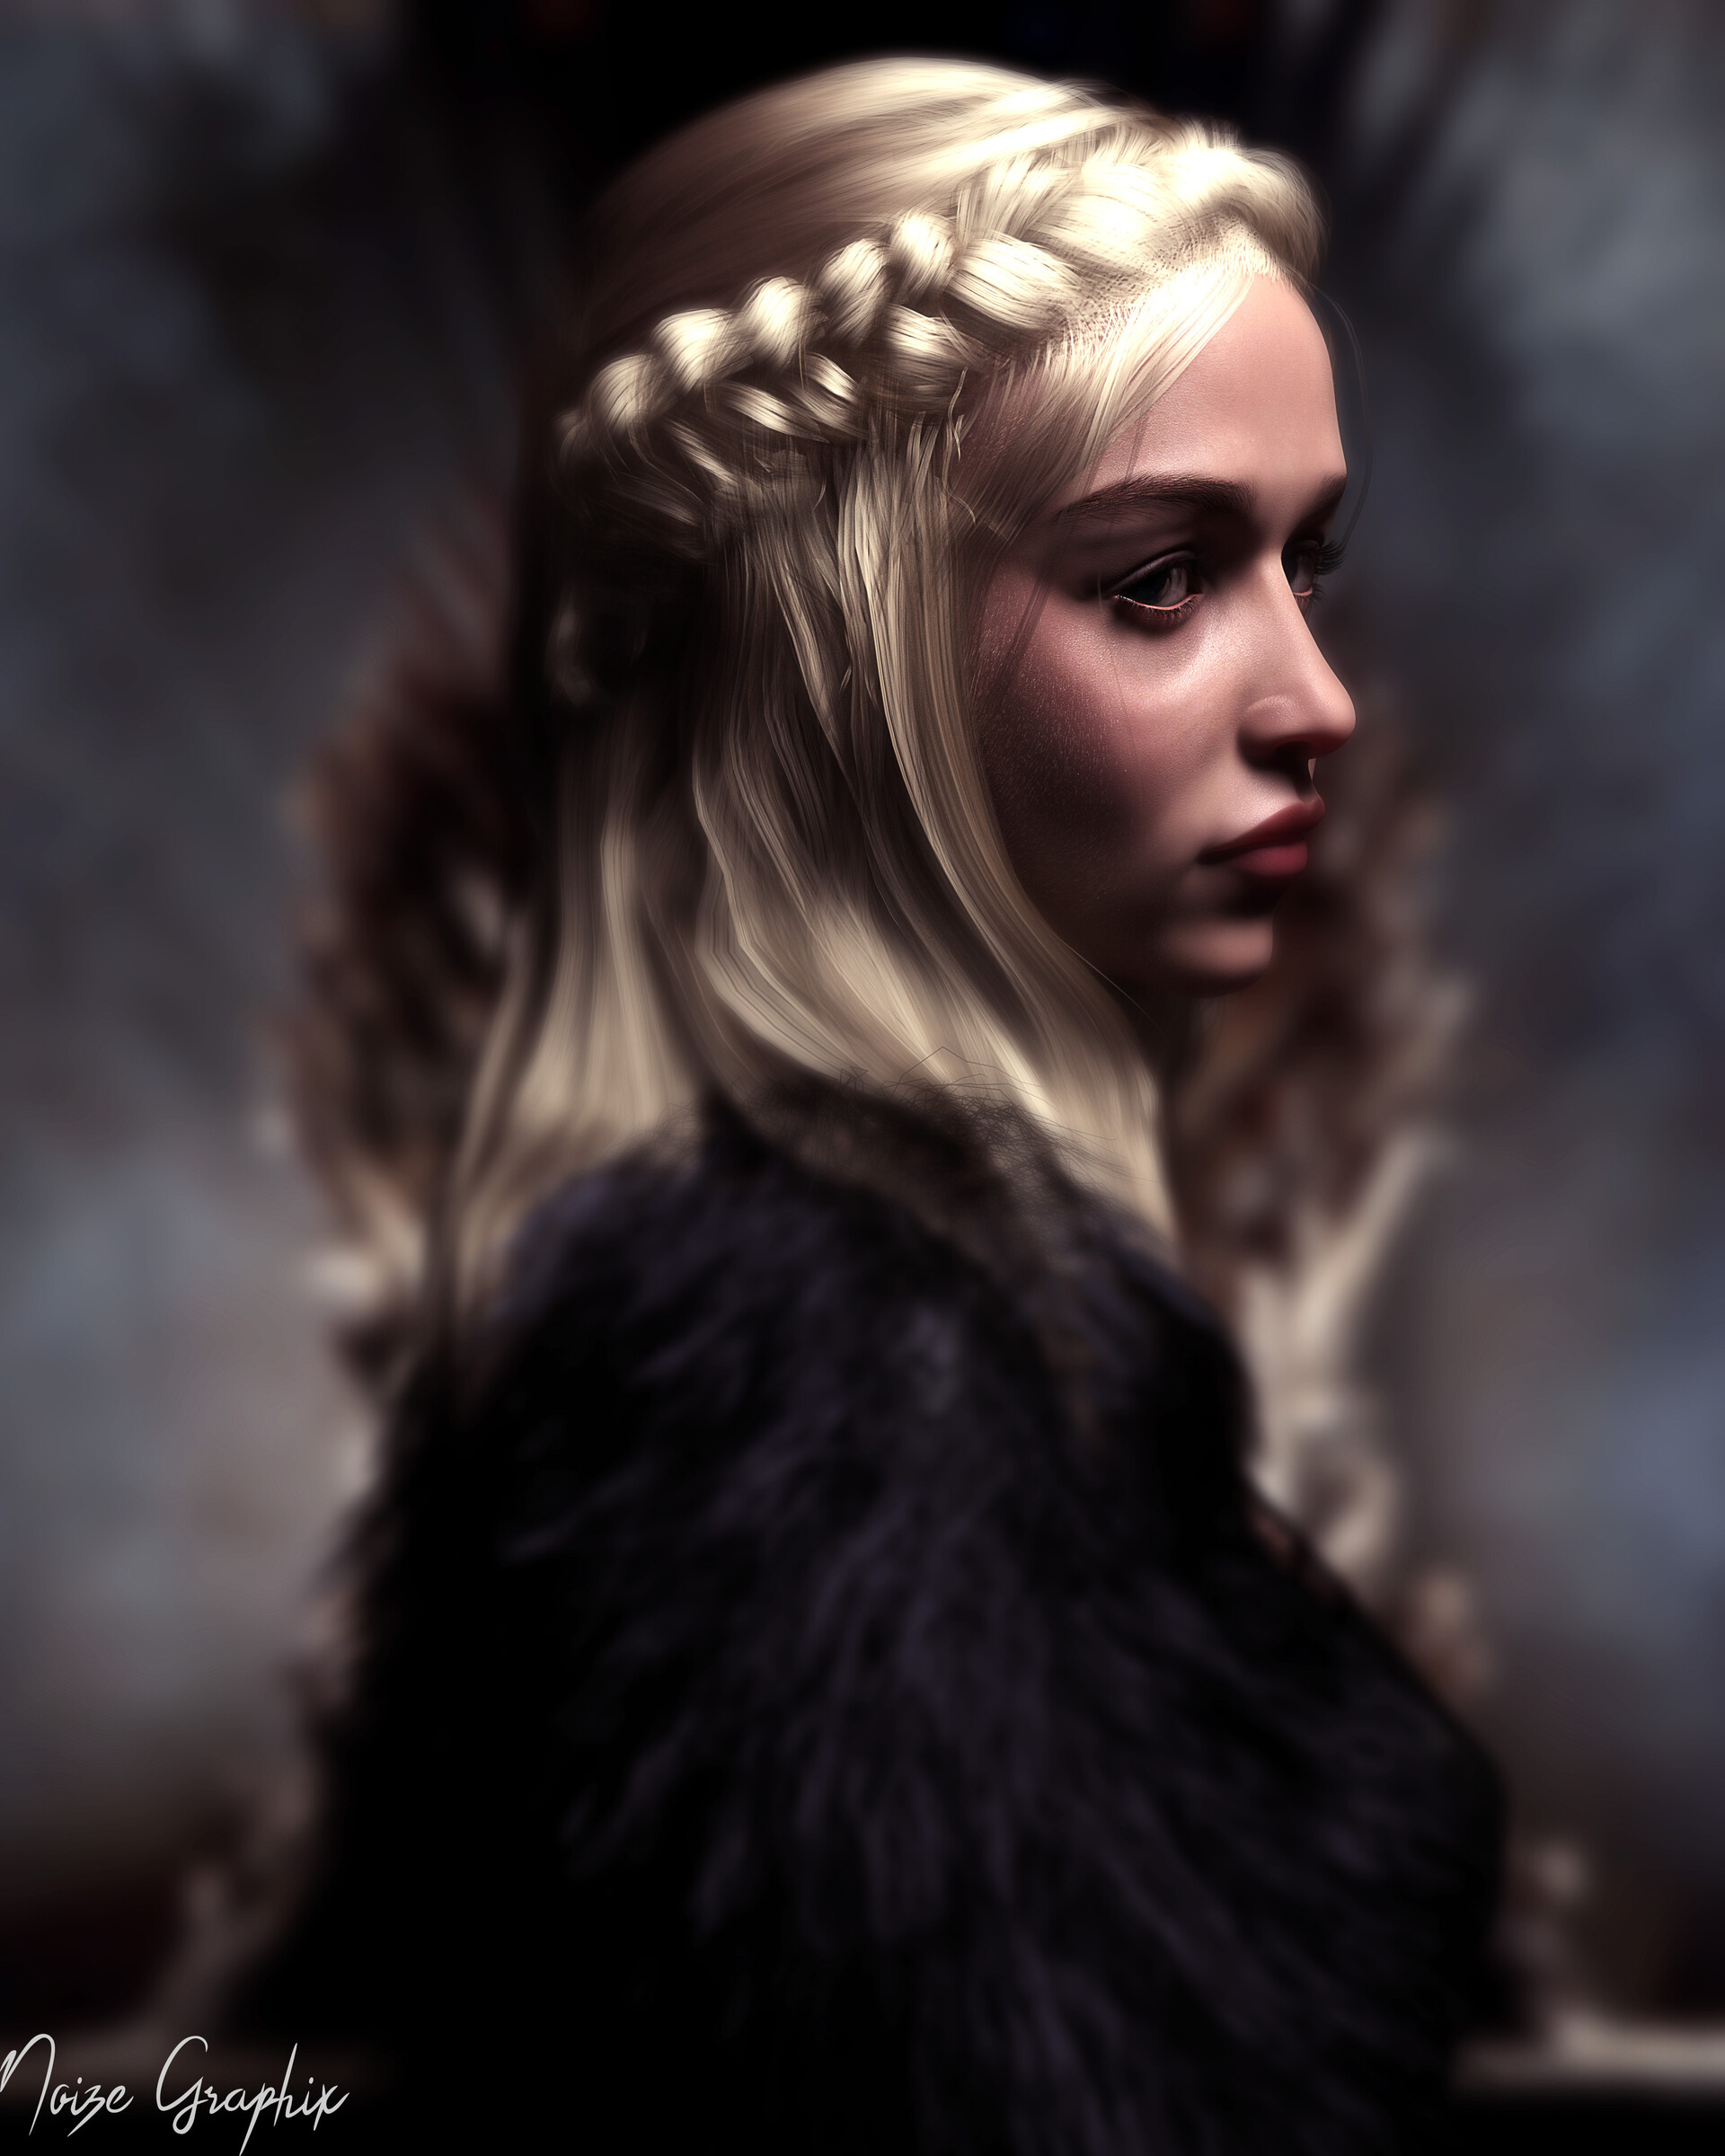 Jordi Djojosemito Blonde Looking Away Women Digital Art CGi 3D Daenerys Targaryen Game Of Thrones Po 1920x2400